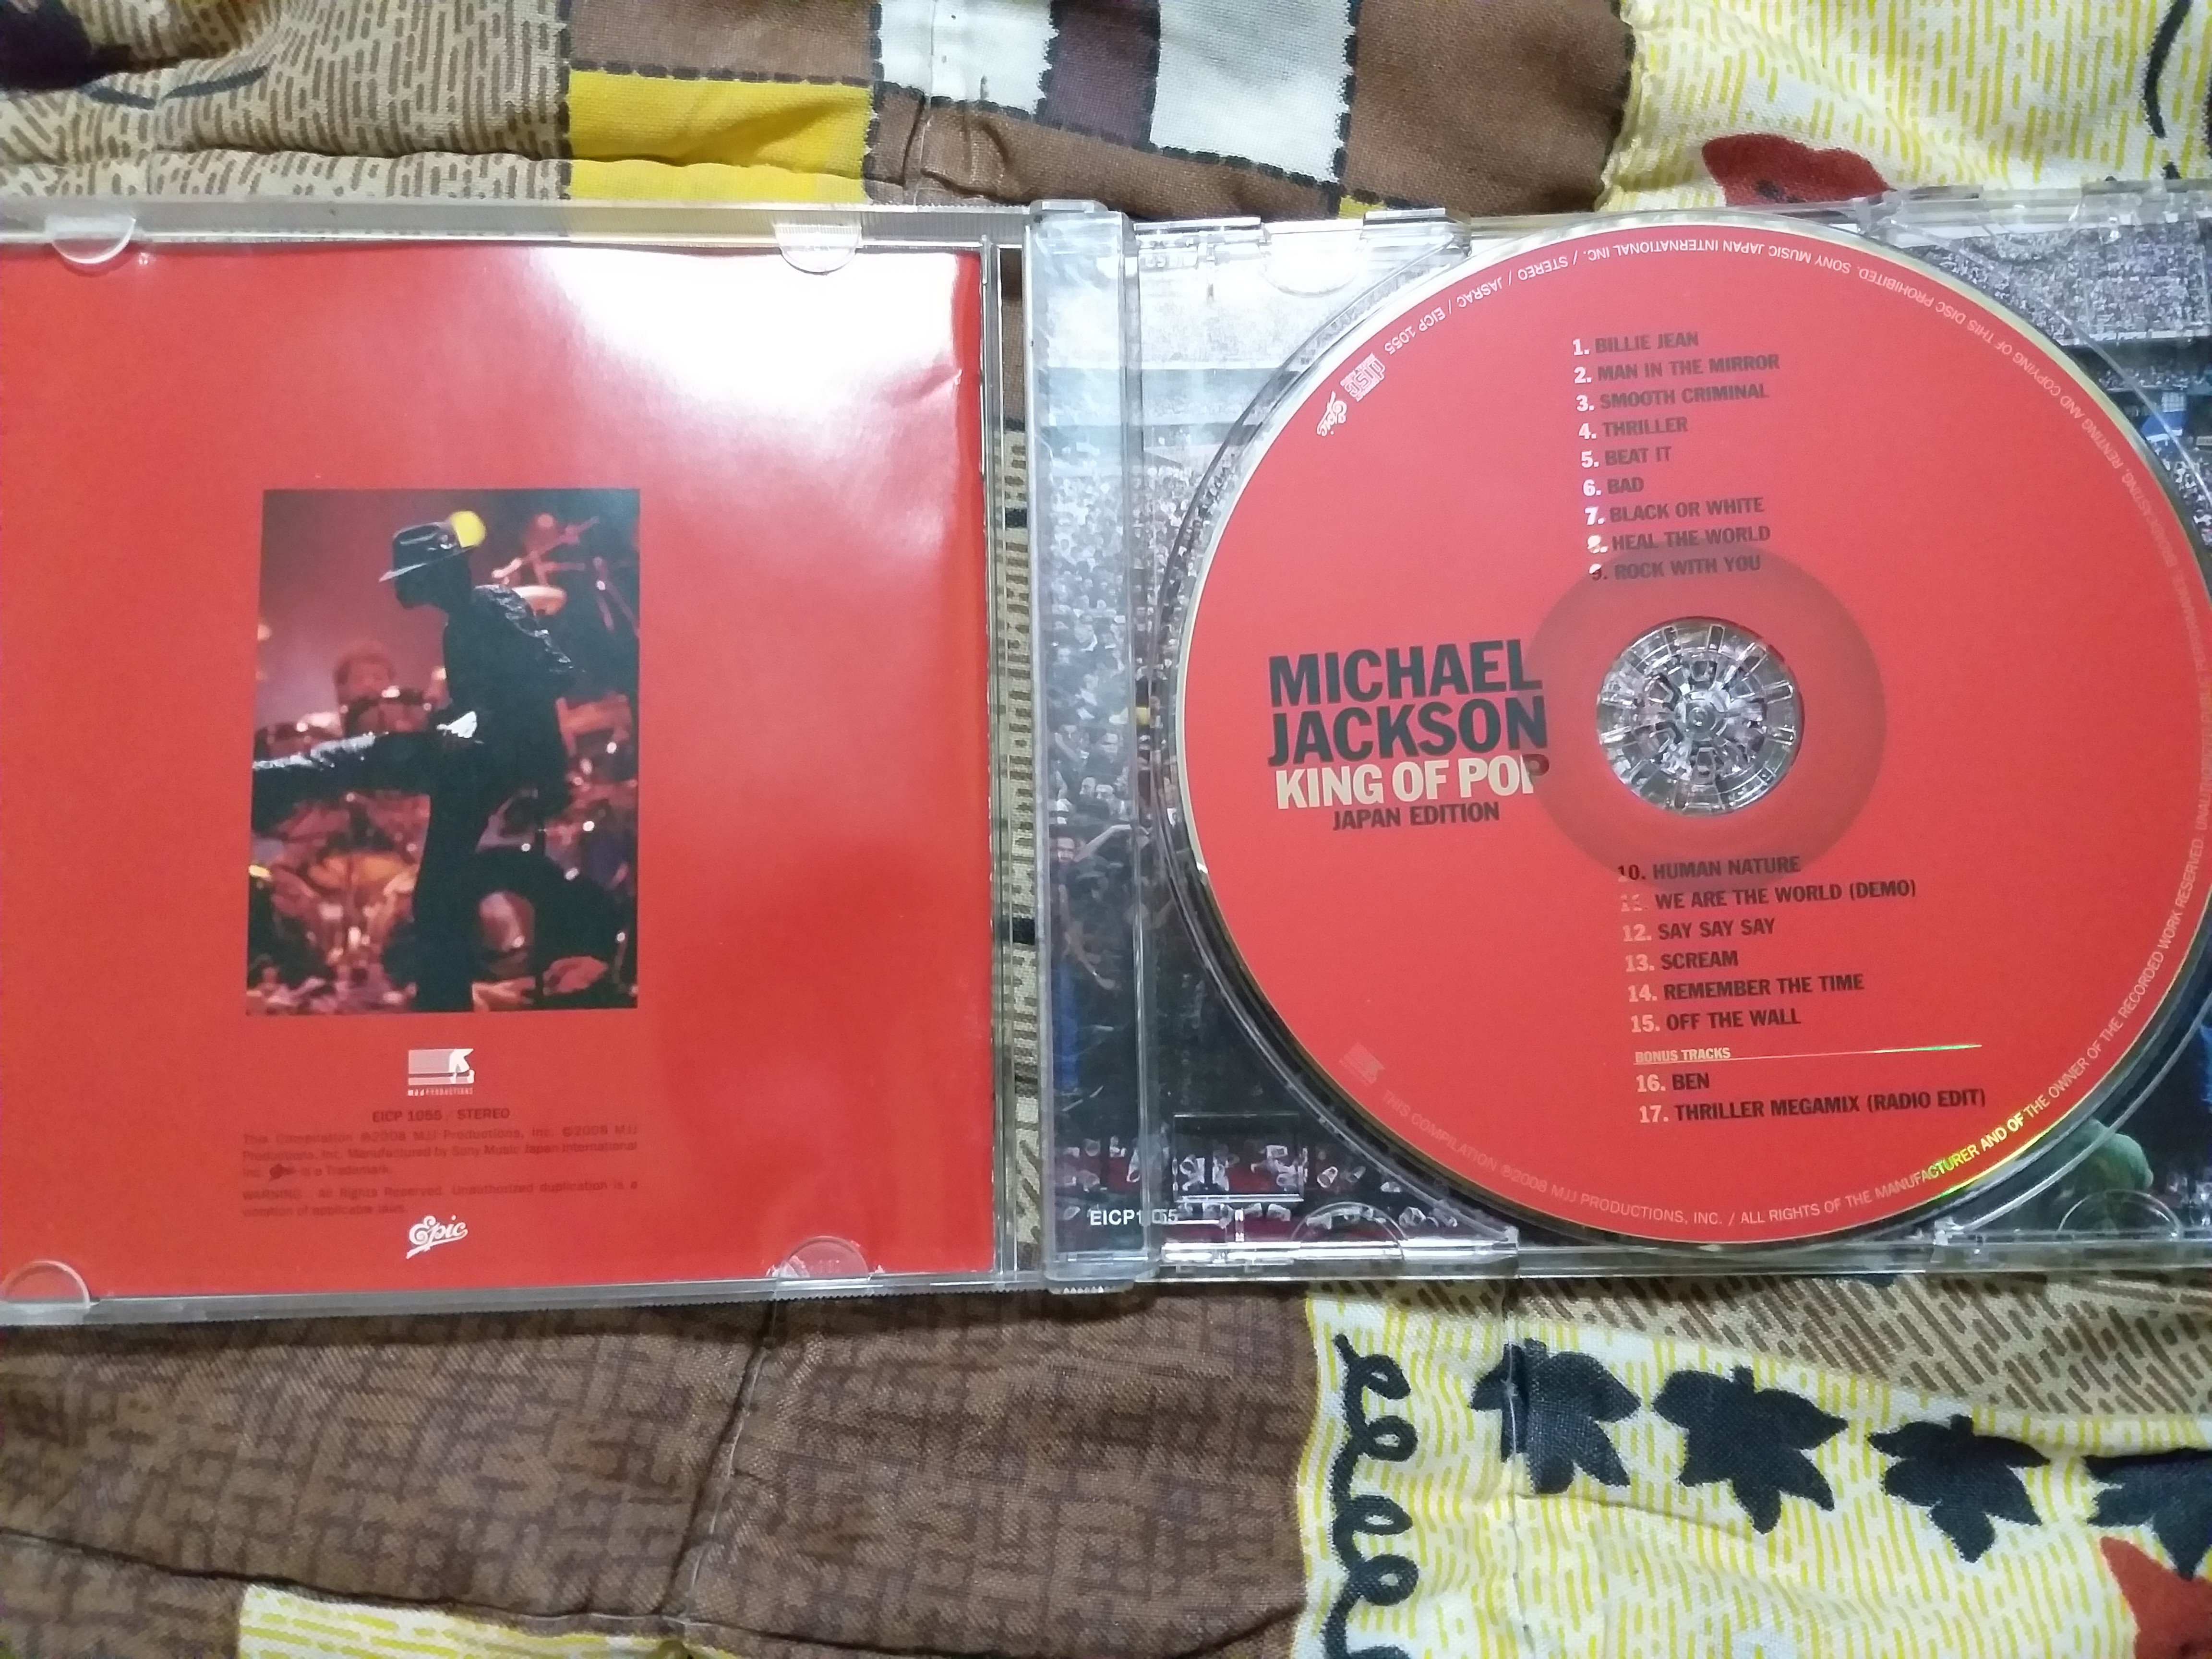 Michael Jackson:King of Pop - Japan Edition